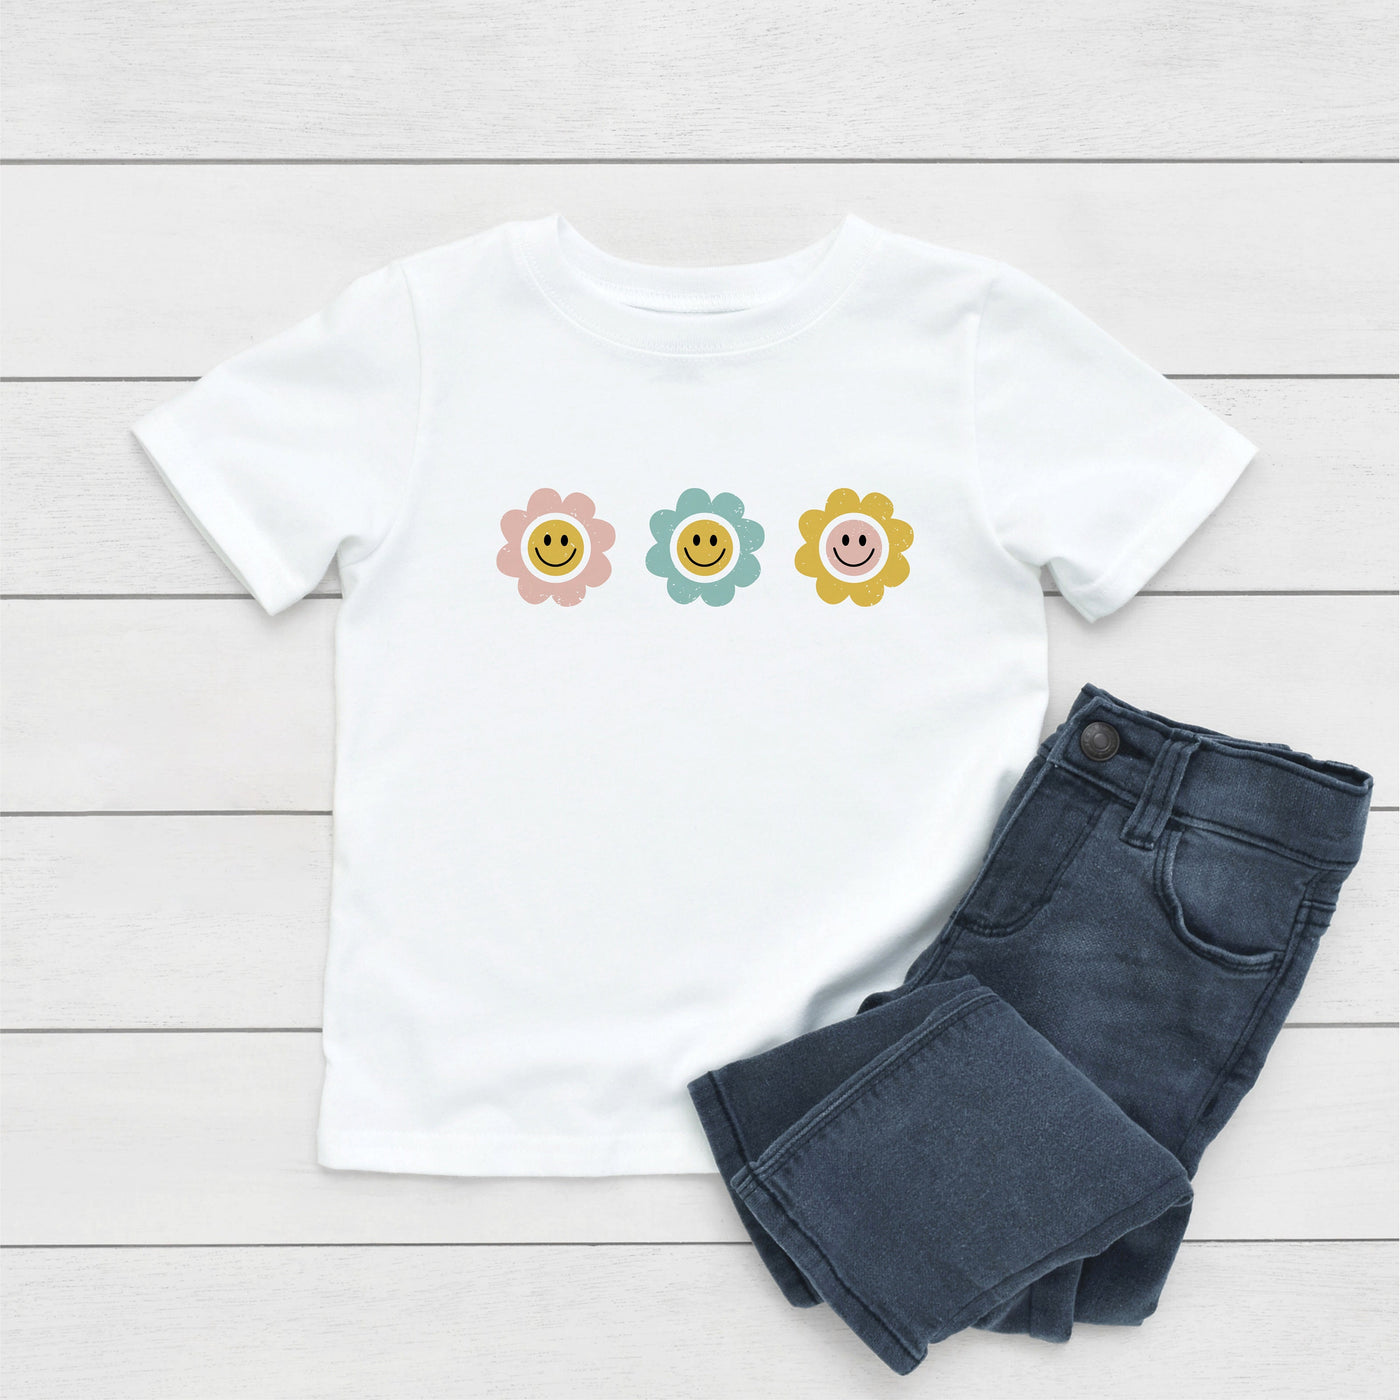 Floral Shirt Girl's, Hippie Flower Shirt, Smiley Flower Shirt, Smile Flower, Cute Flower Shirt Girls, Girl's Floral Shirt, Flower Hippie